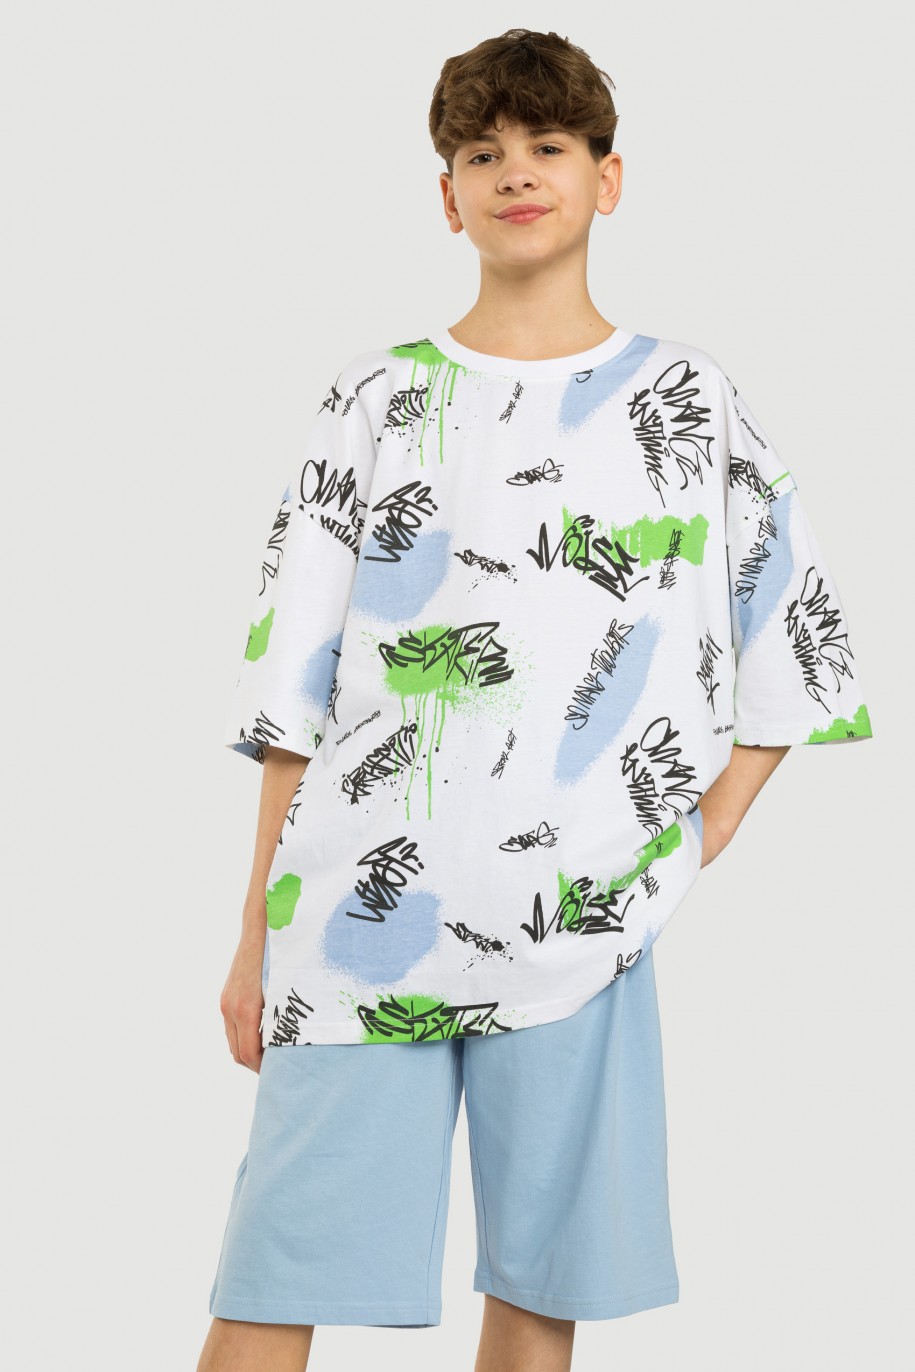 Wielobarwna piżama we wzory graffiti - 40669